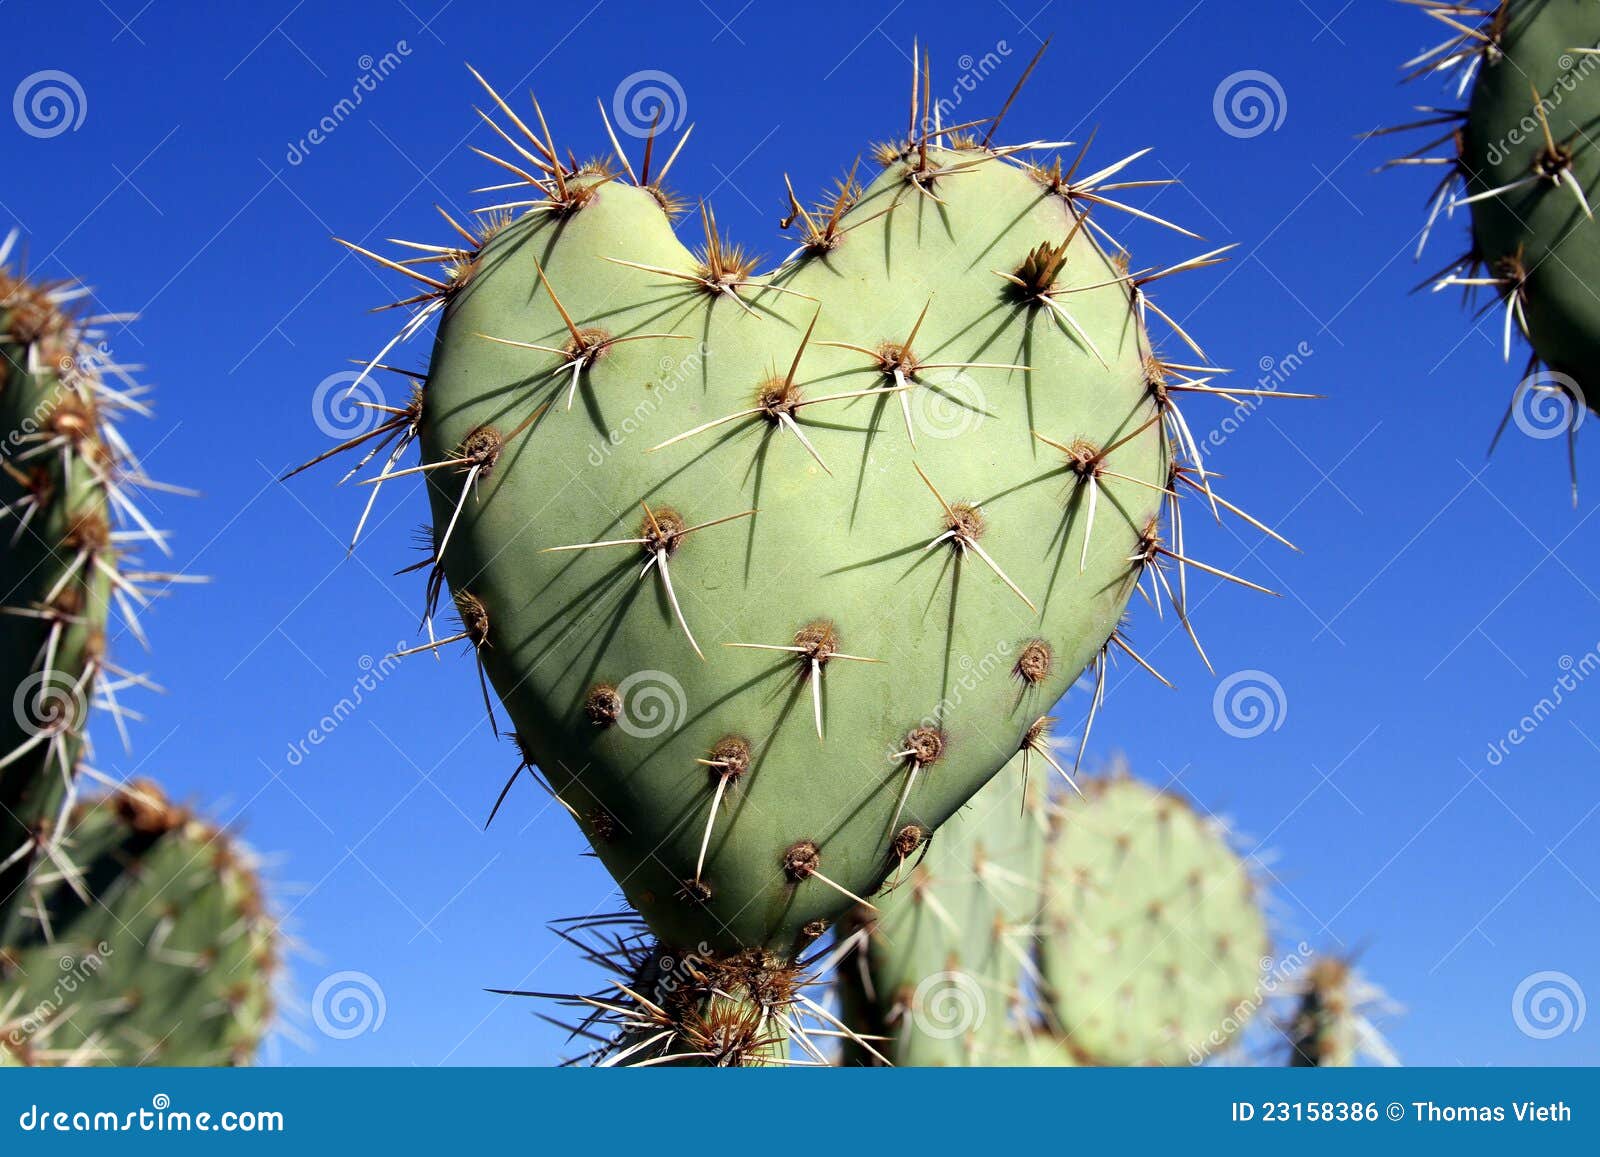 arizona: a prickly pear cactus heart - love you!